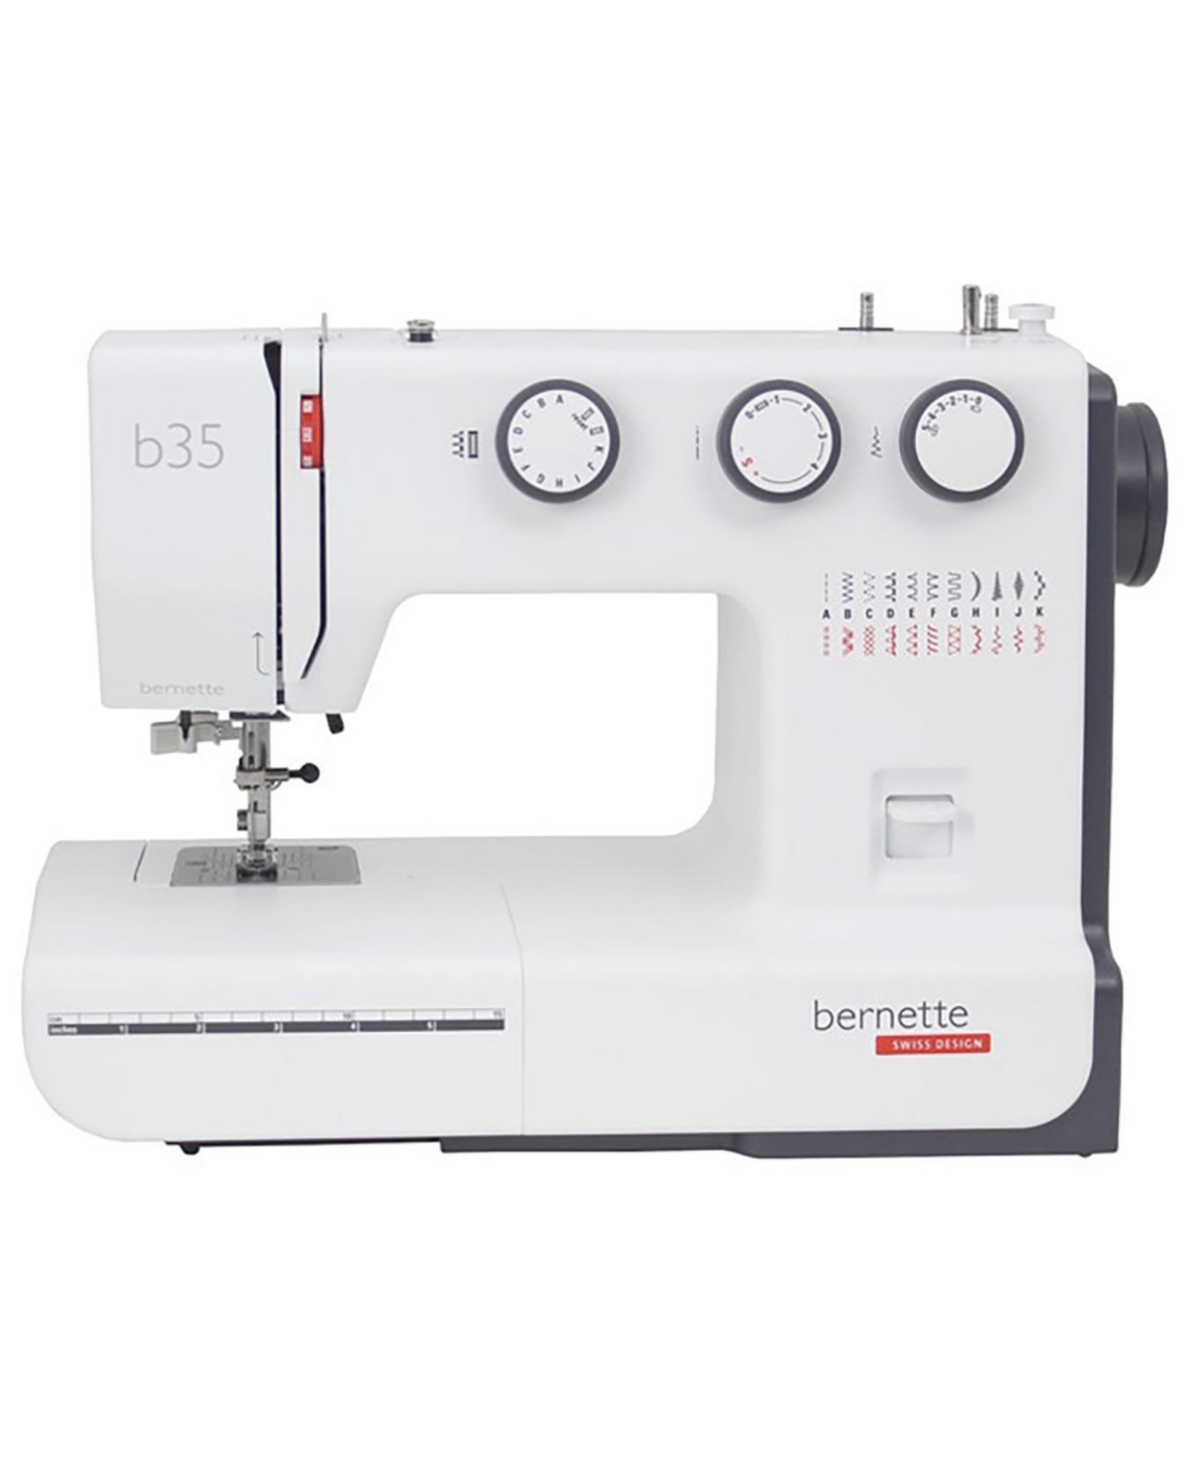 b35 Swiss Design Mechanical Sewing Machine - White